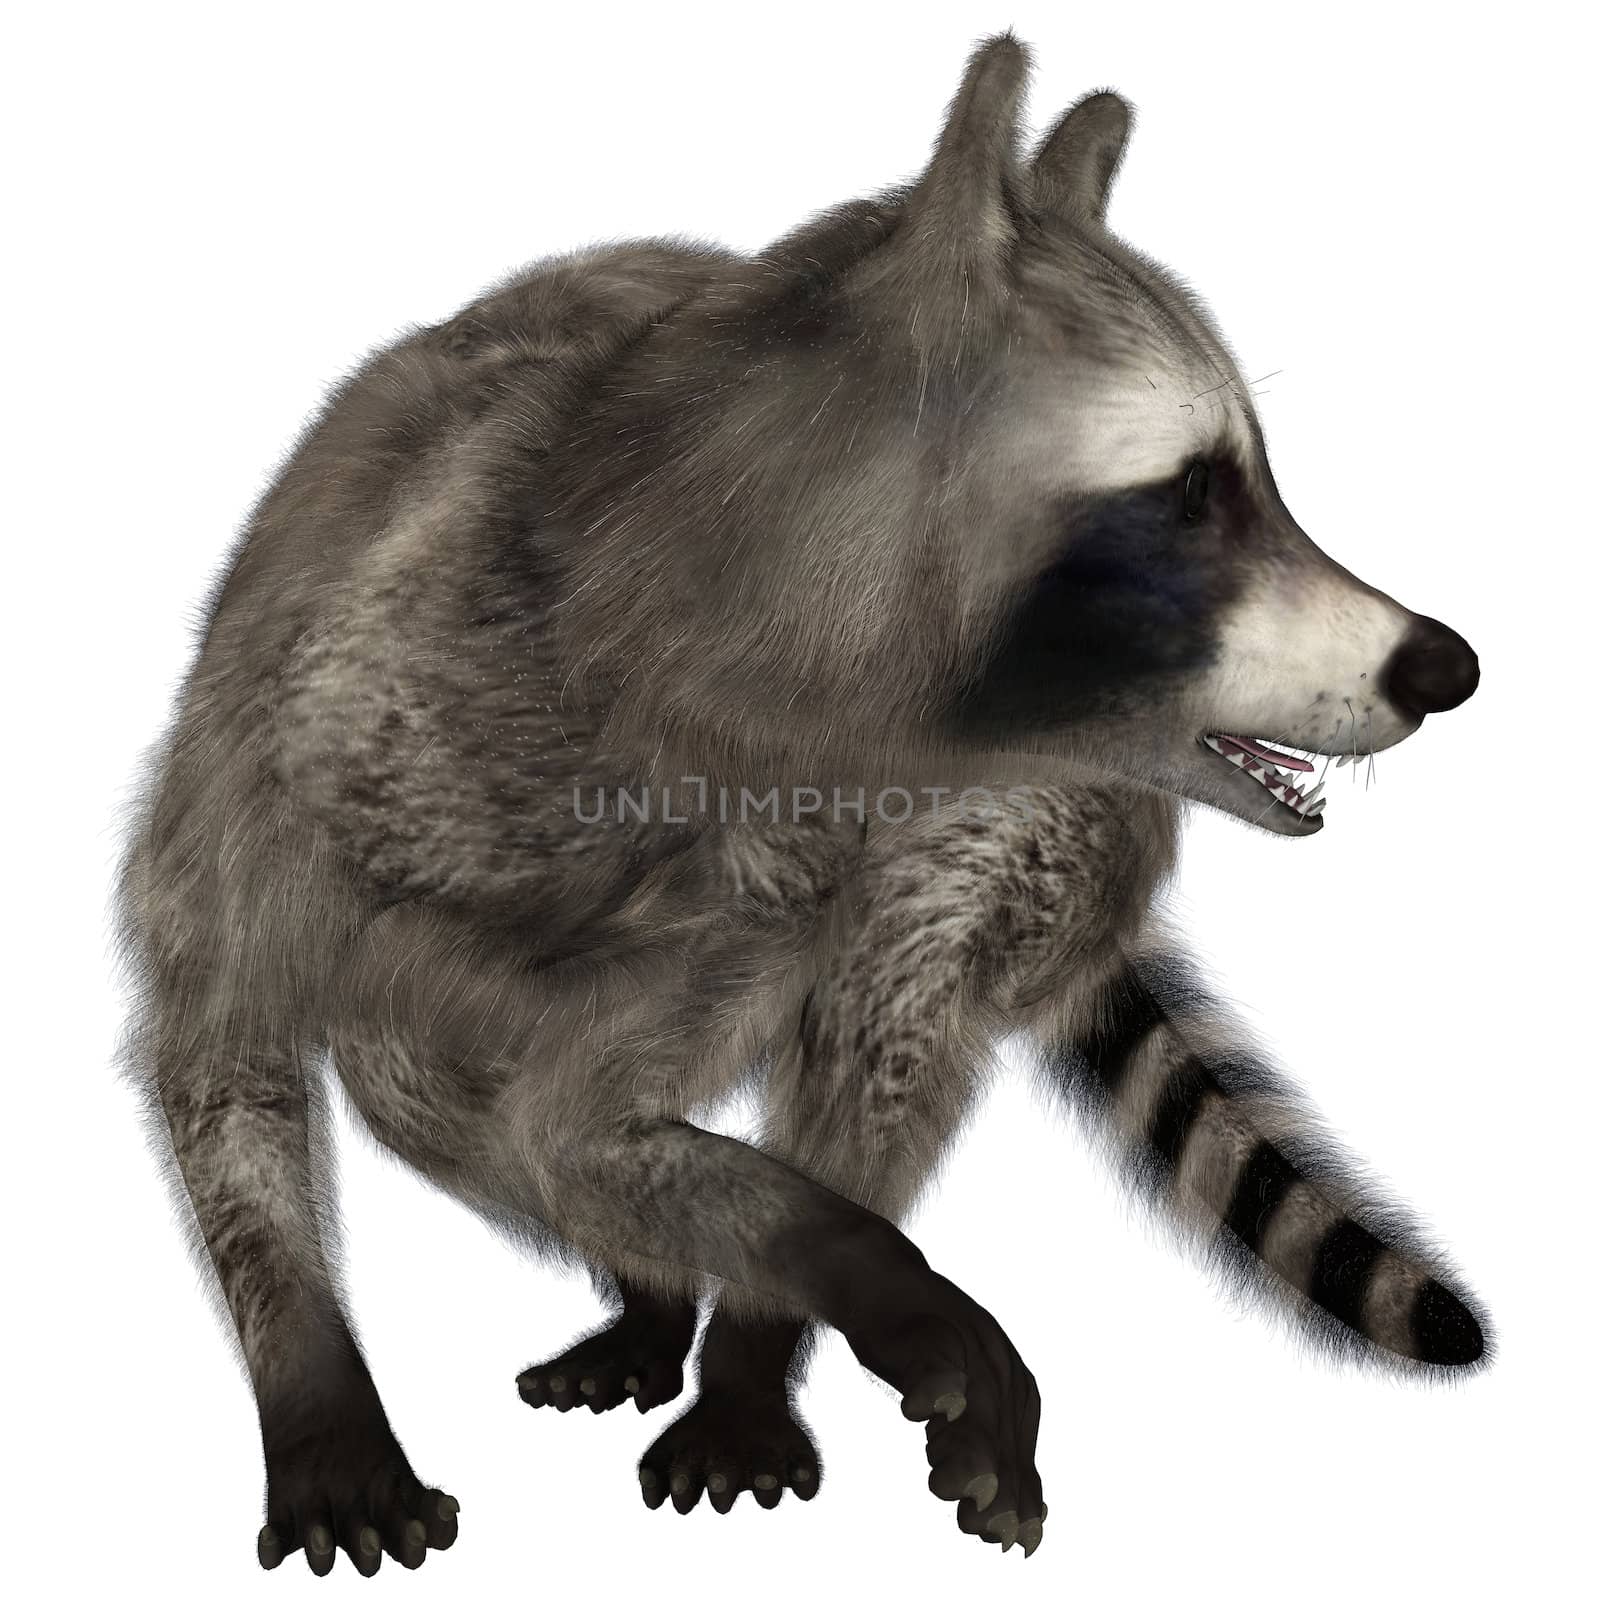 Raccoon by Vac